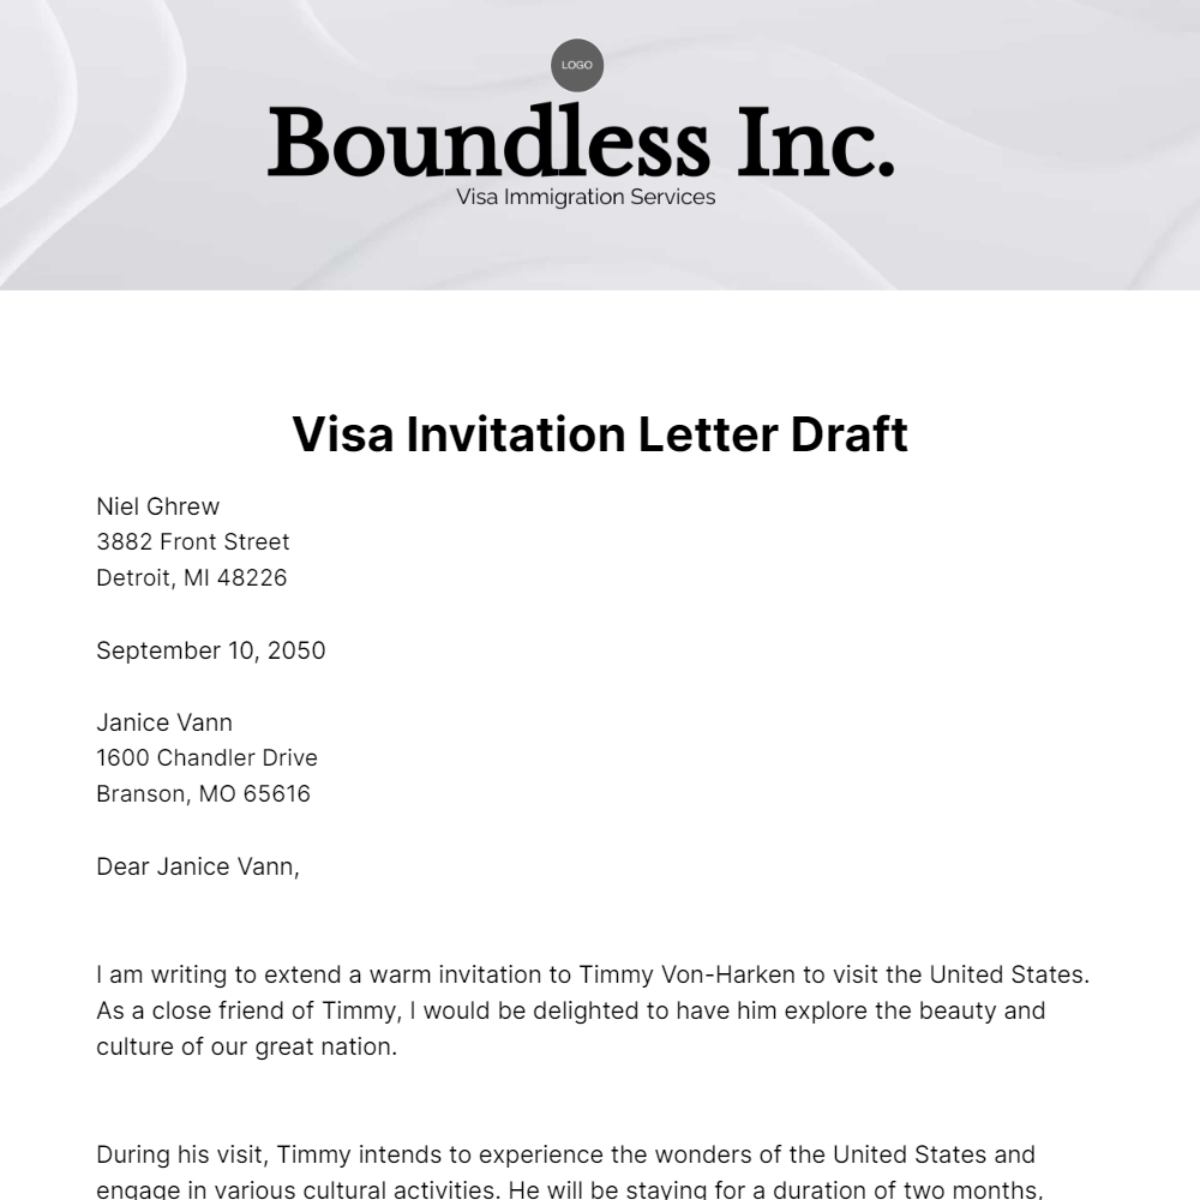 Visa Invitation Letter Draft Template